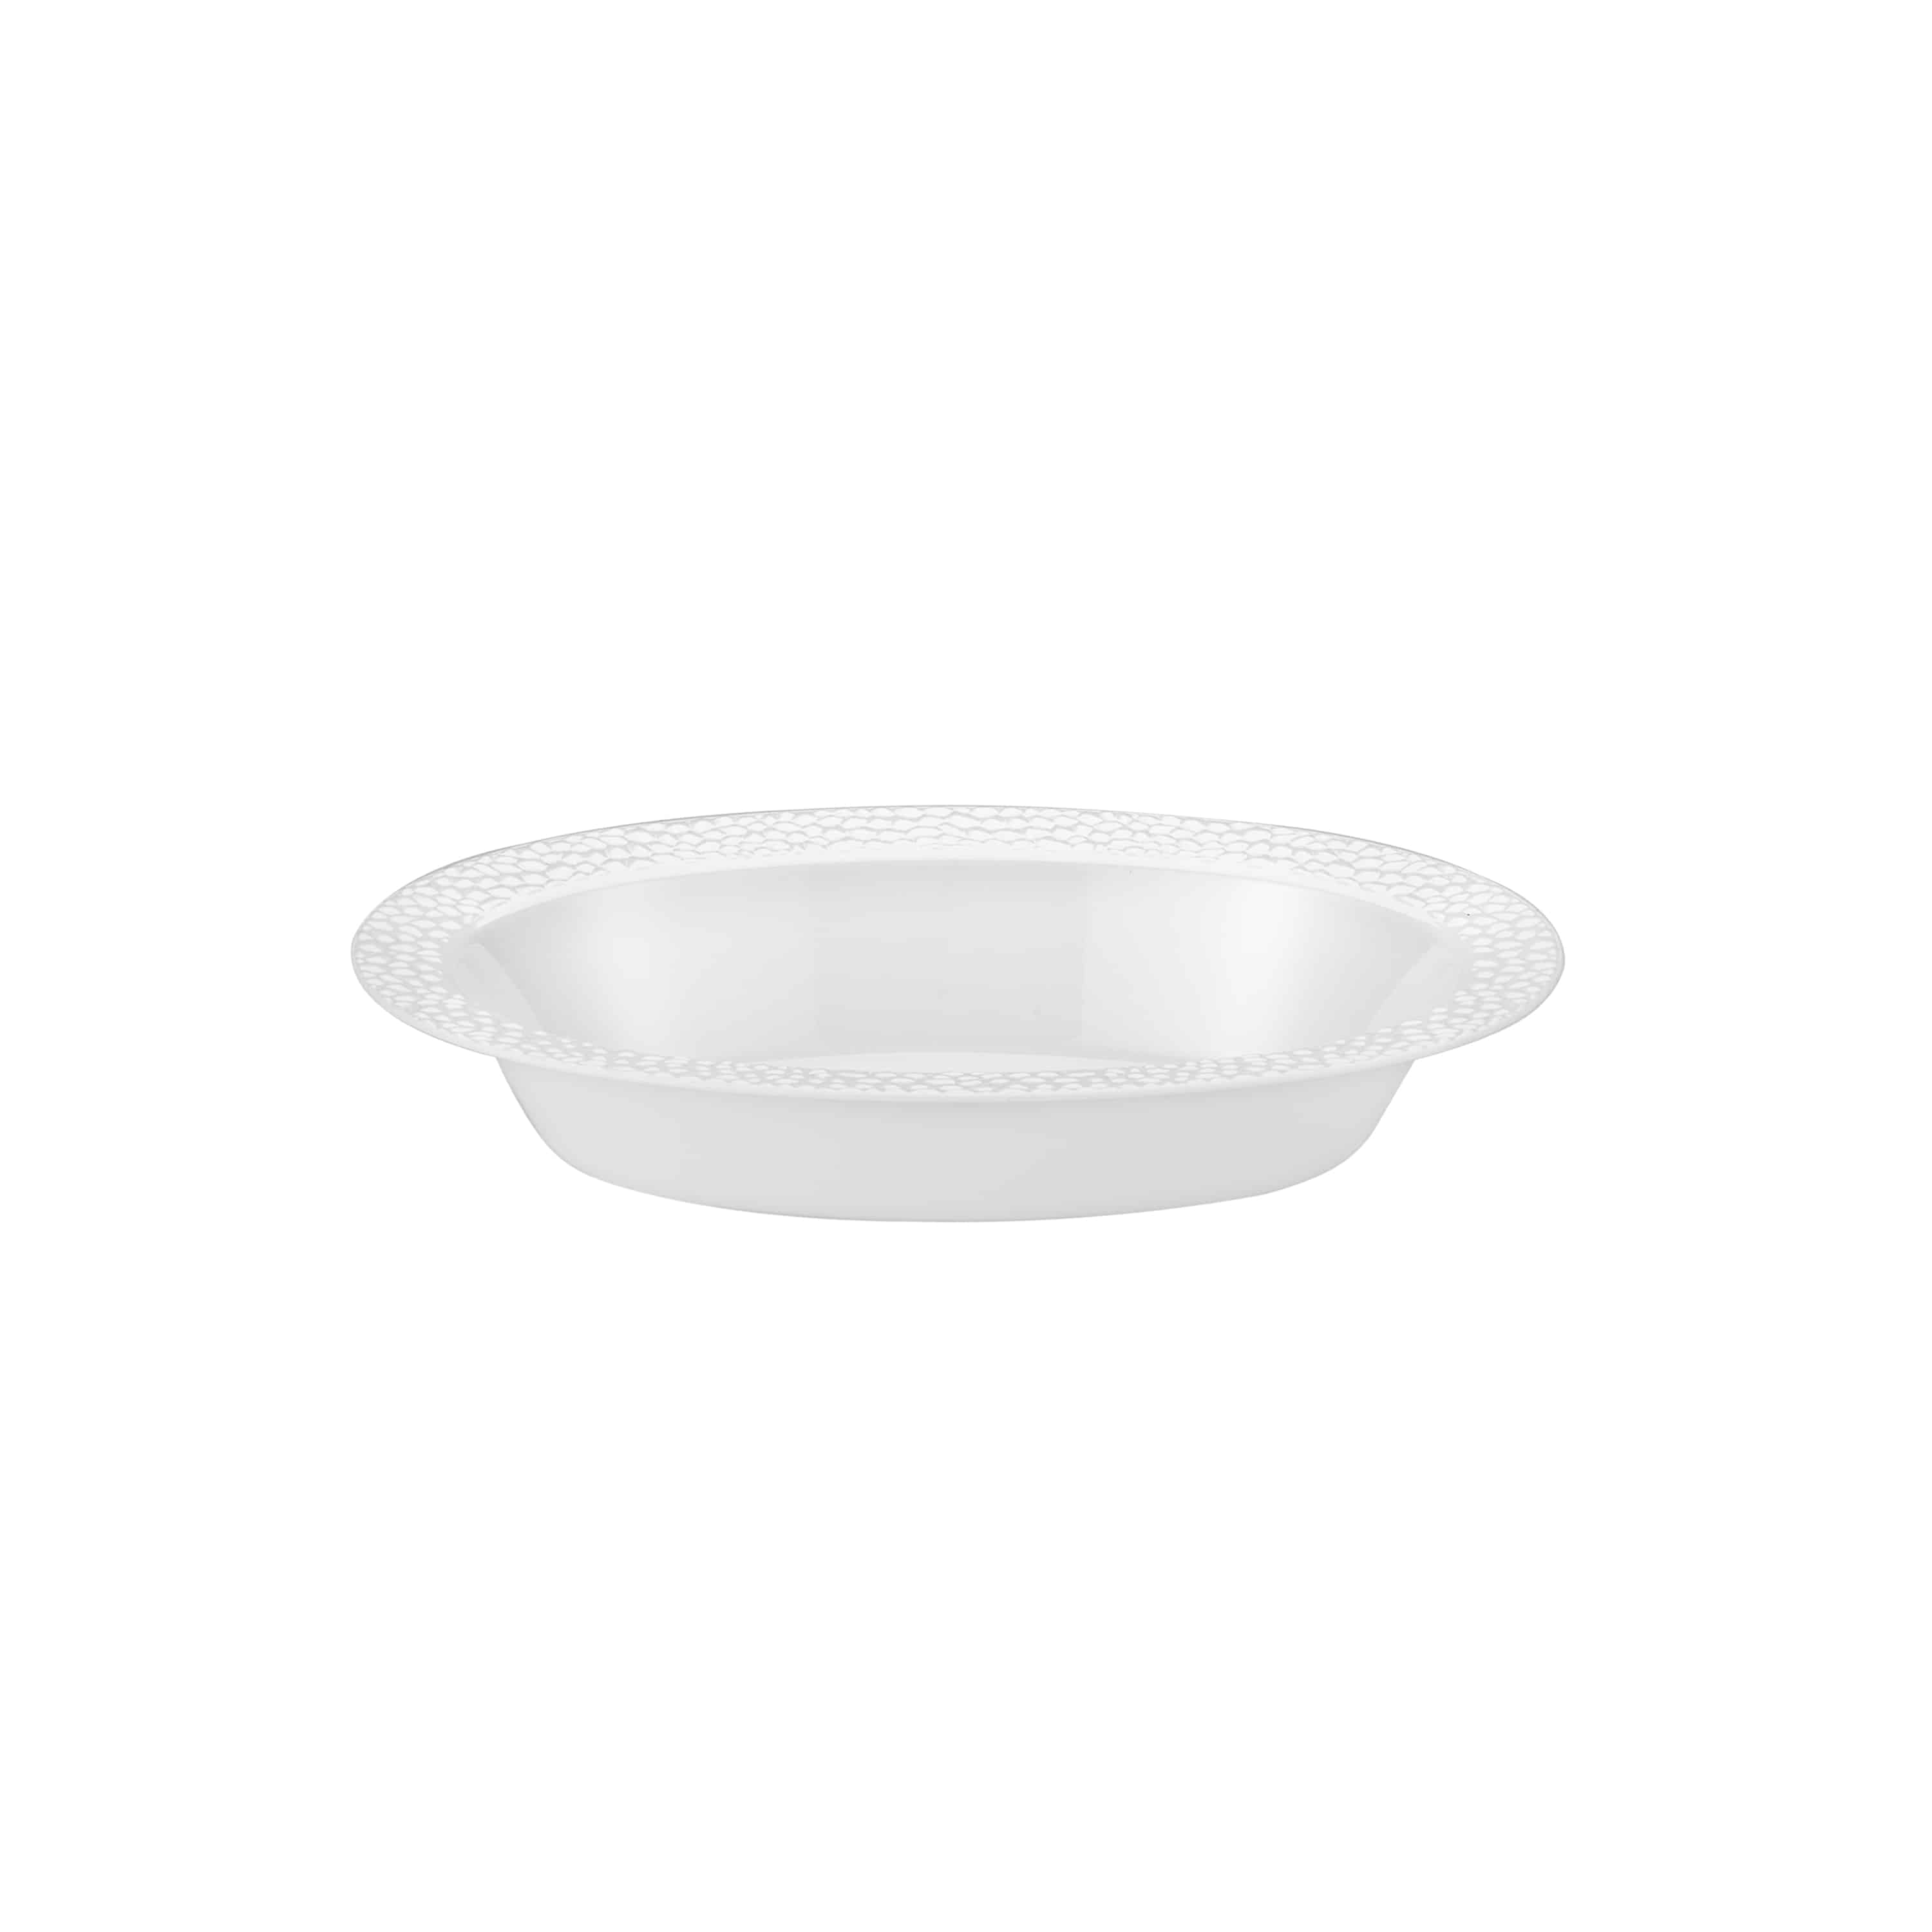 Pebbled Premium Plastic Oval Serving Bowls